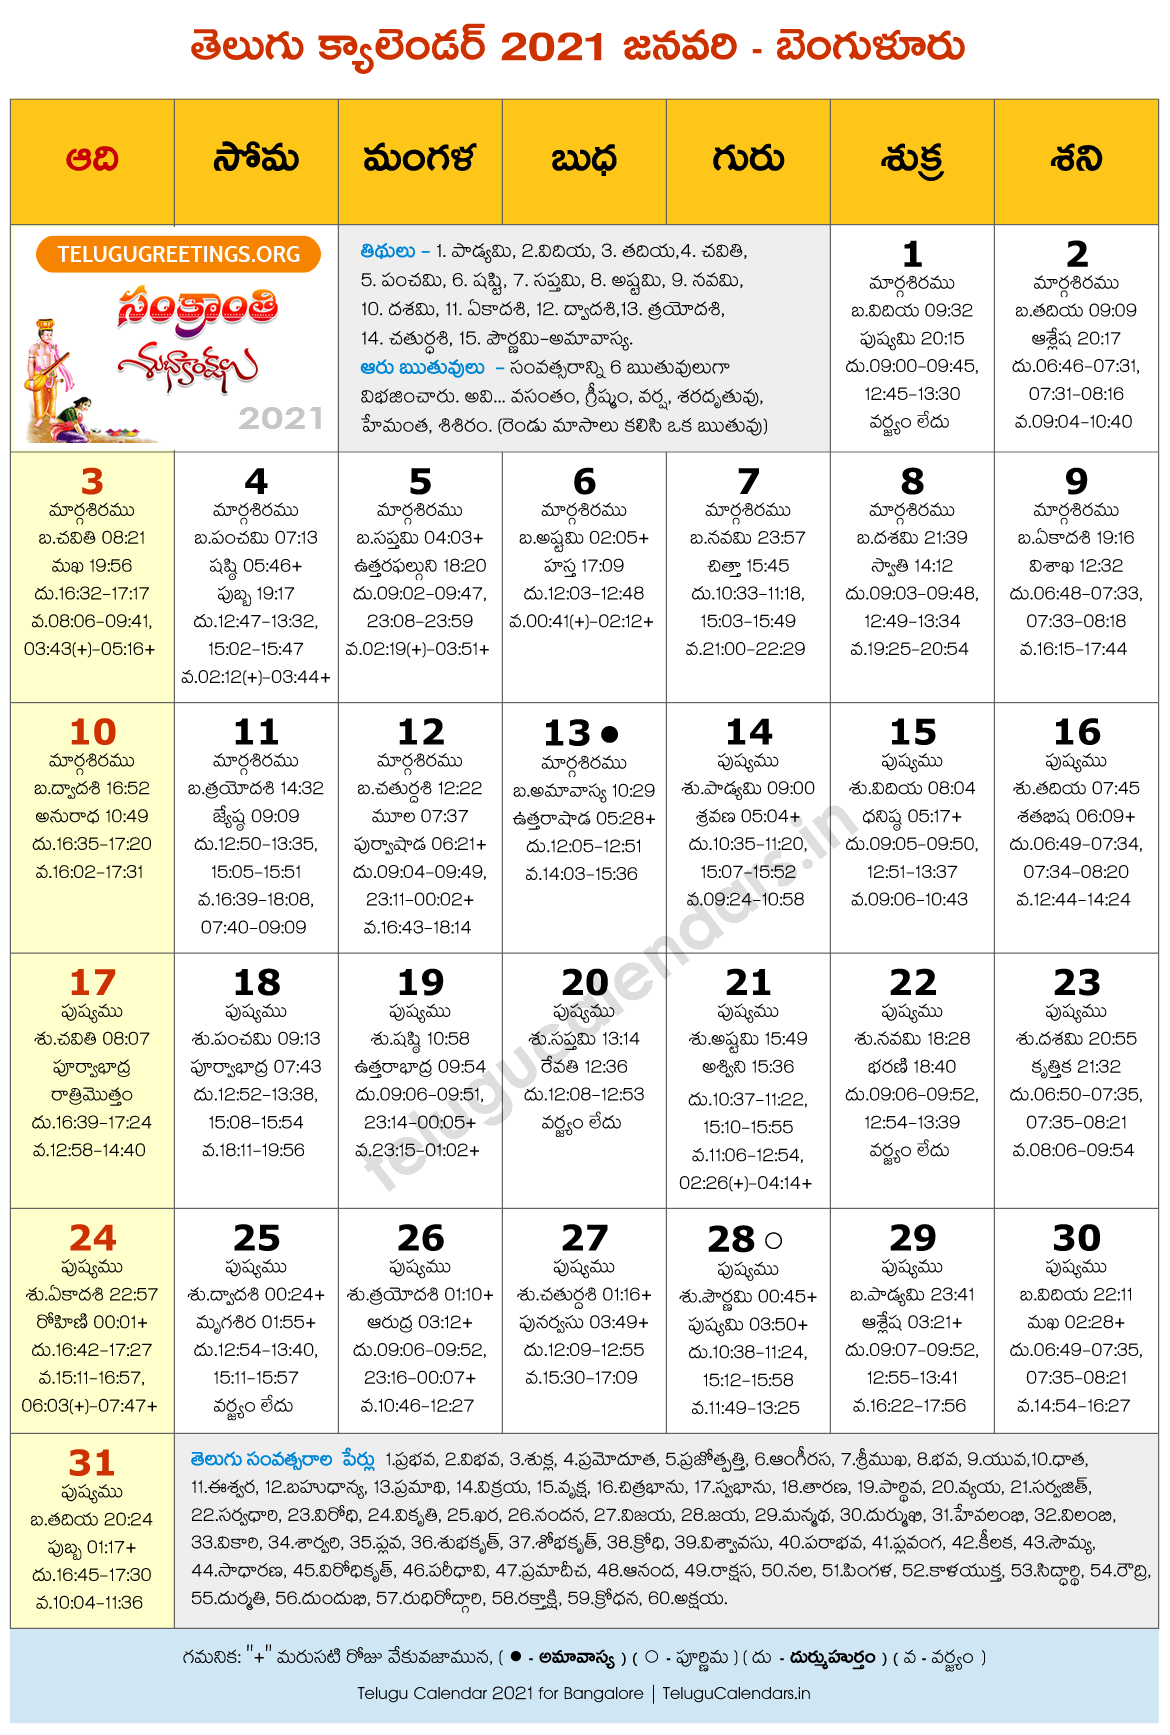 Bengaluru 2021 January Telugu Calendar - 2022 Telugu Calendar PDF